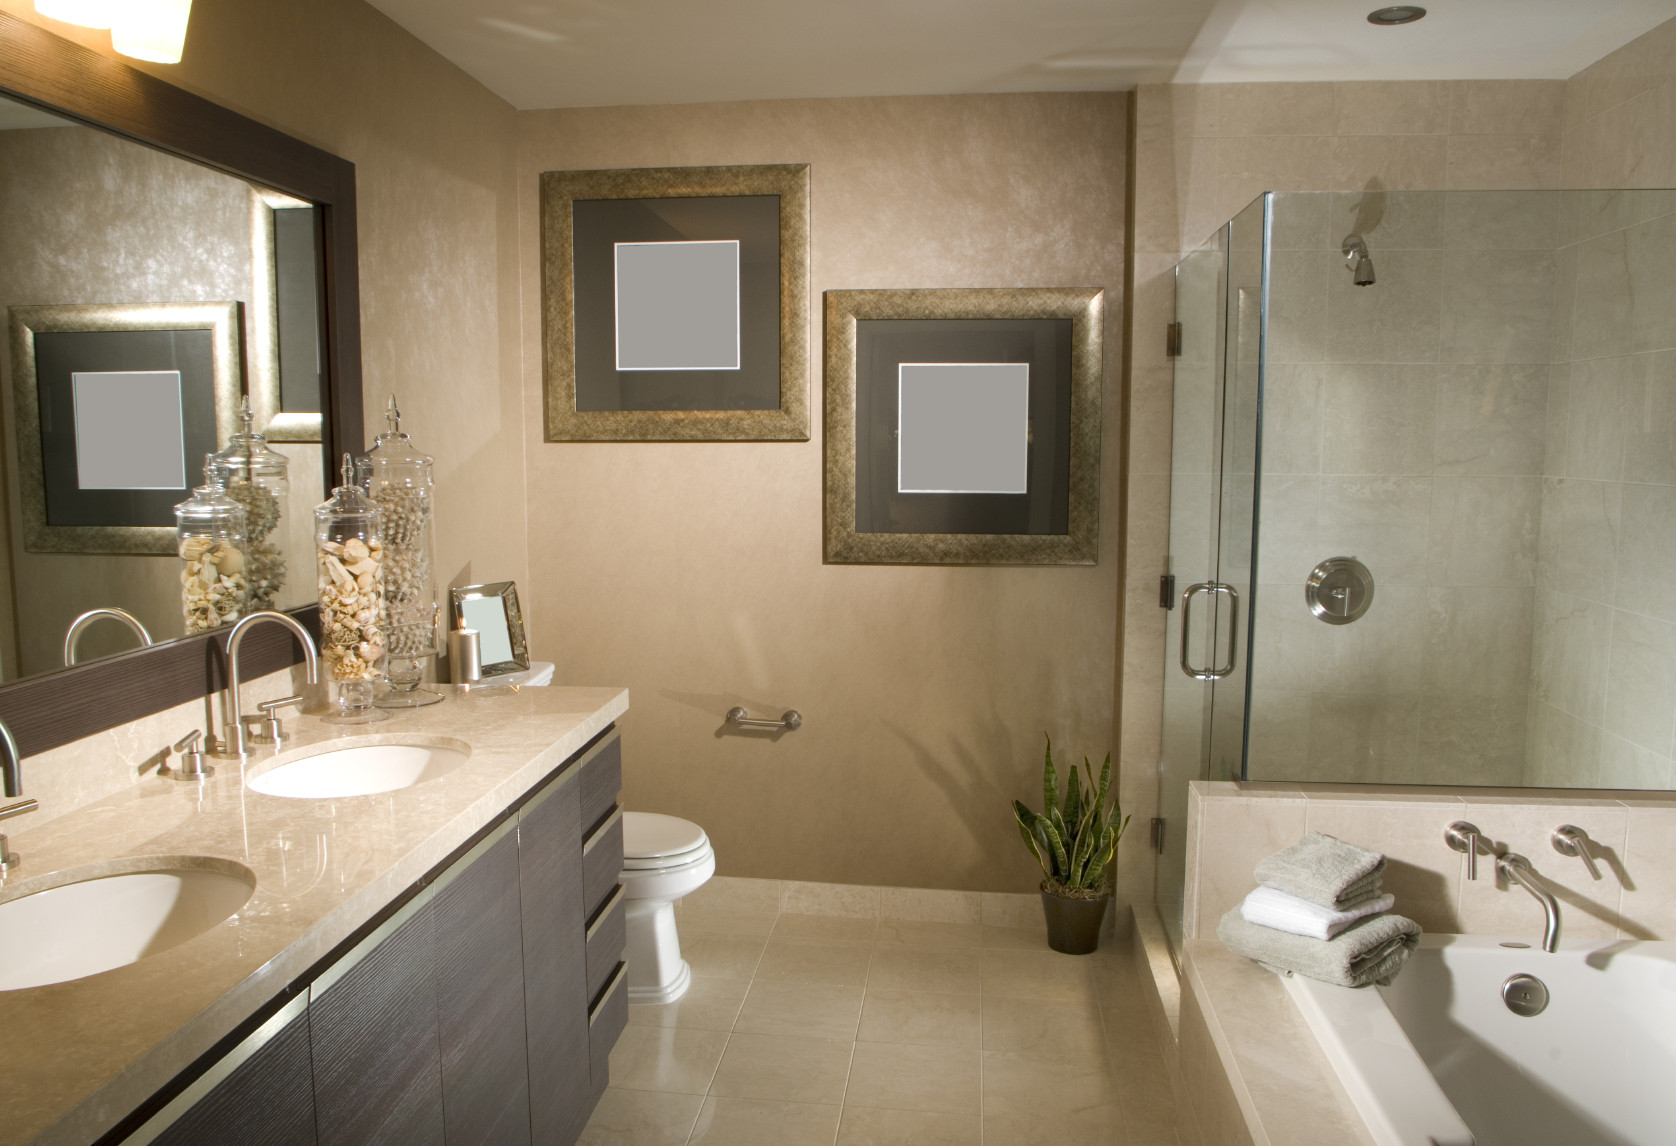 Photos Of Bathroom Remodels
 Top 6 Trending Bathroom Renovations Your Reno Guys